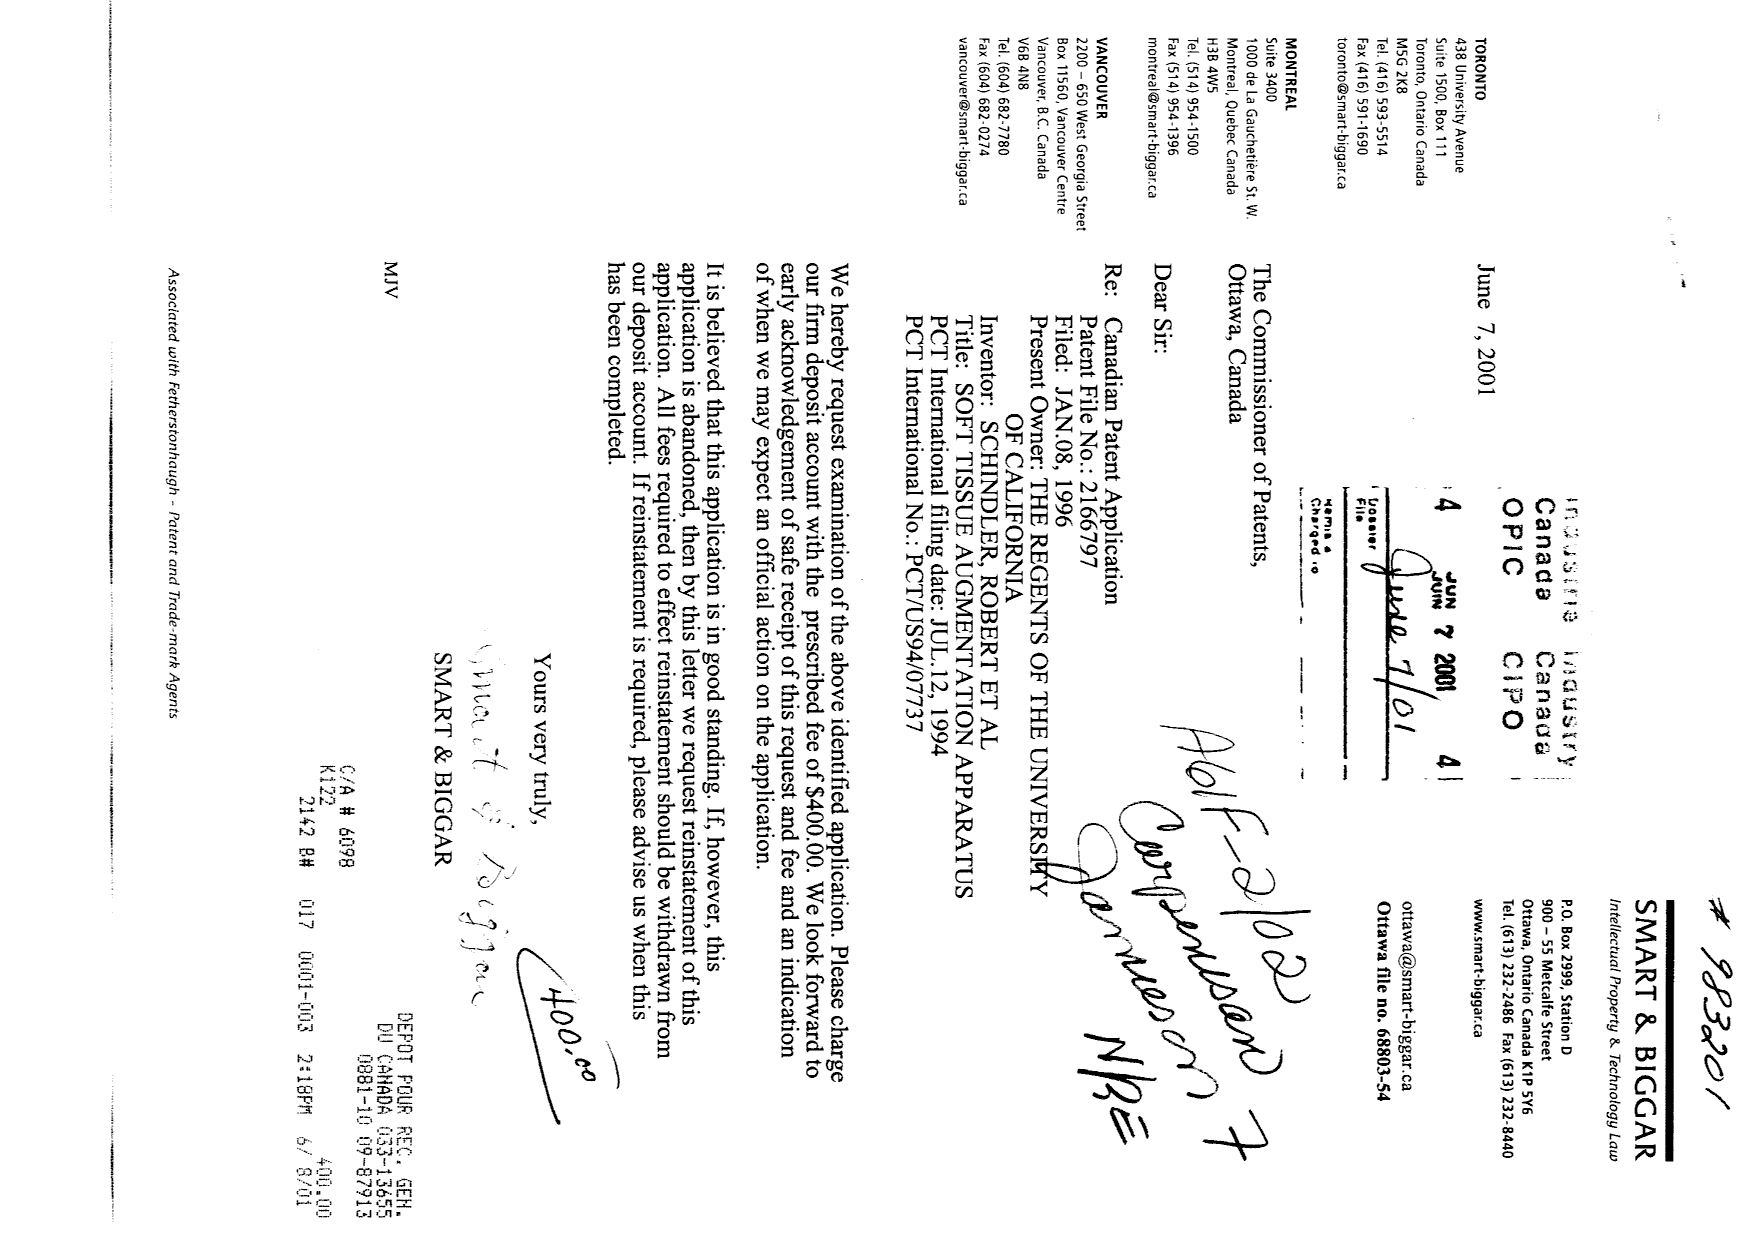 Canadian Patent Document 2166797. Prosecution-Amendment 20010607. Image 1 of 1